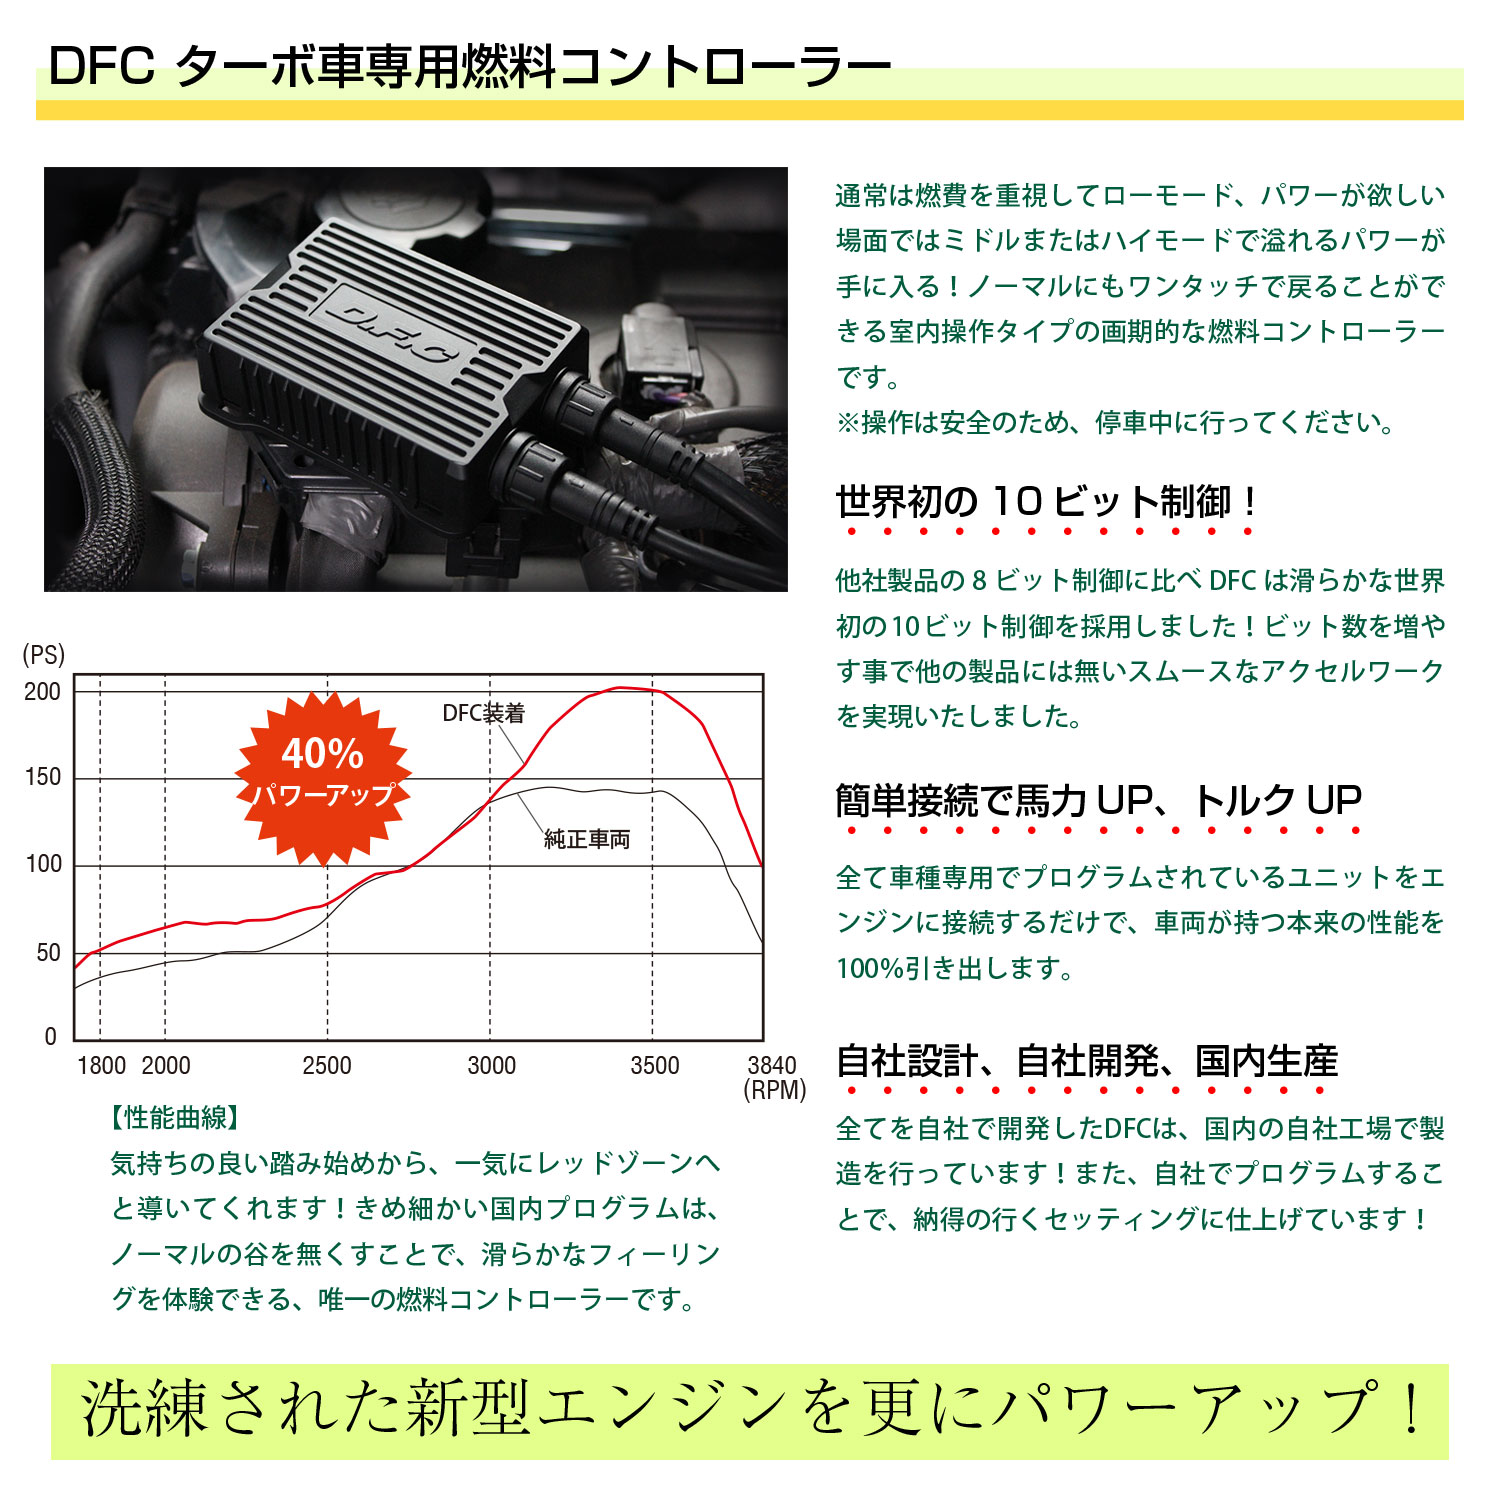 DFC ディーゼル車用燃料コントローラー 新型デリカD5 ディーゼル用 